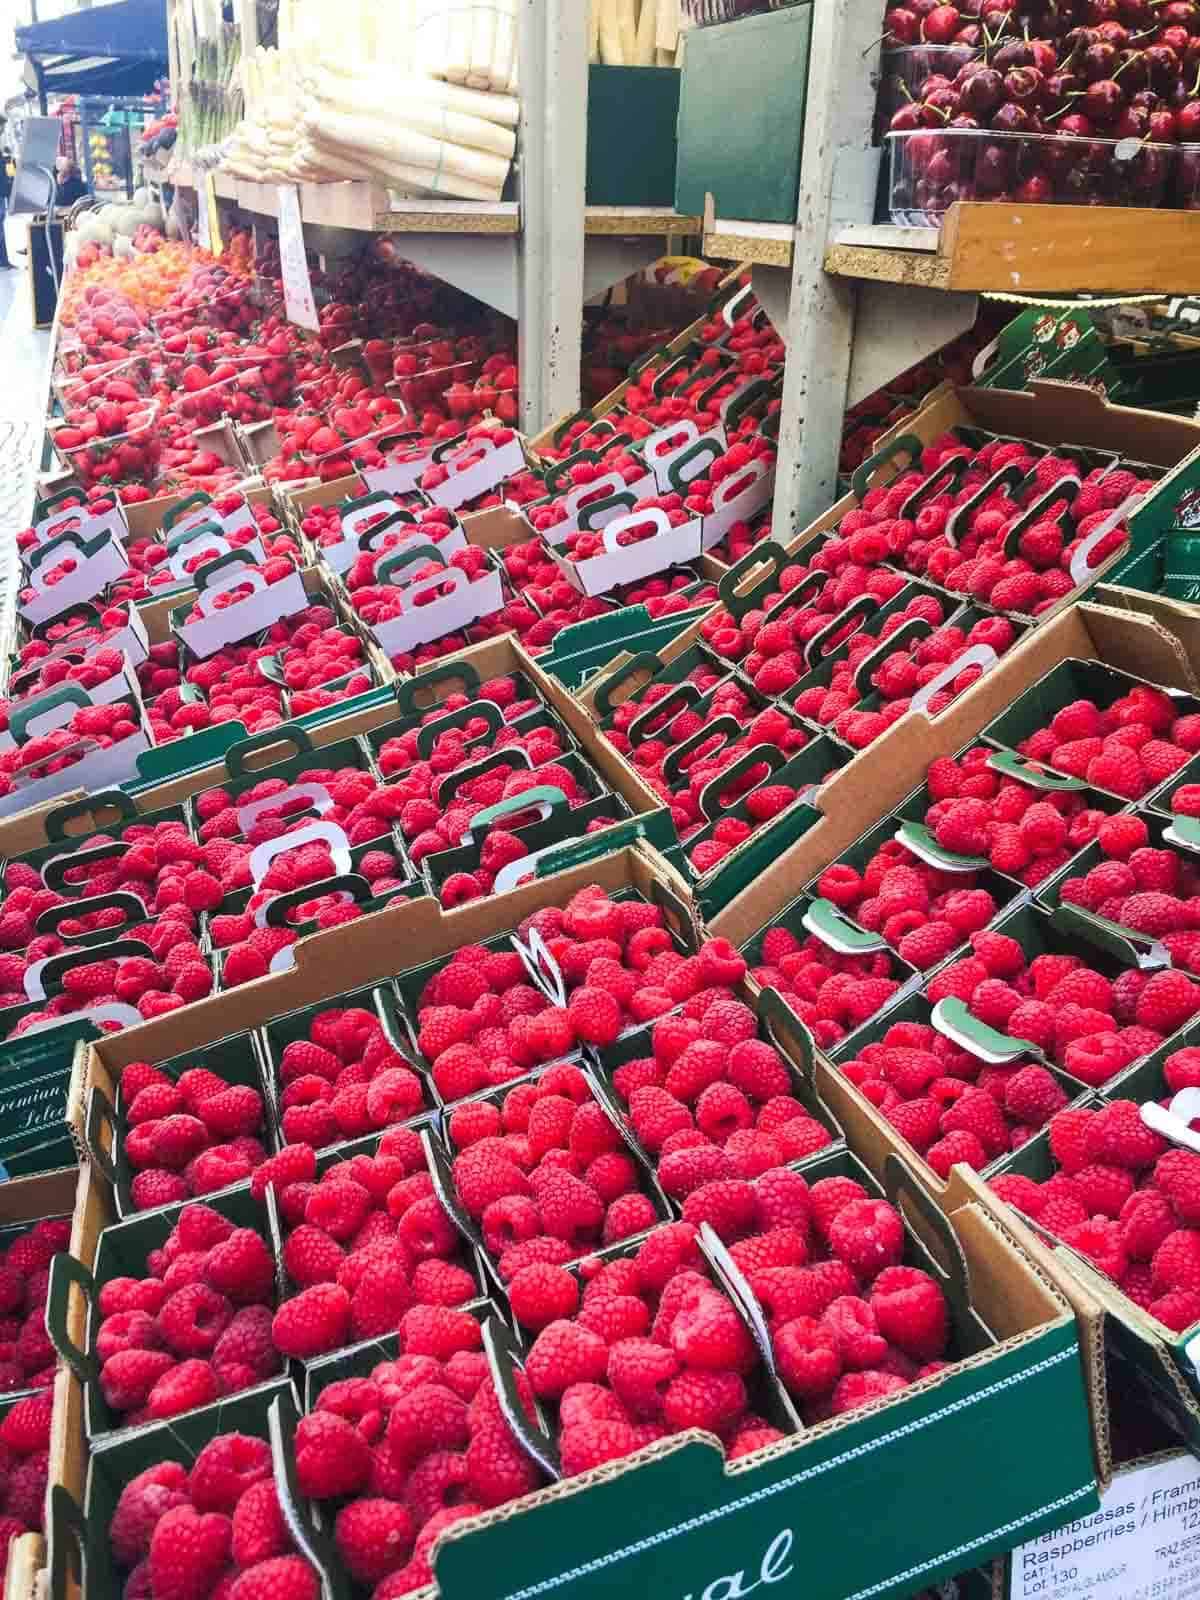 raspberries in farmers market boxes.